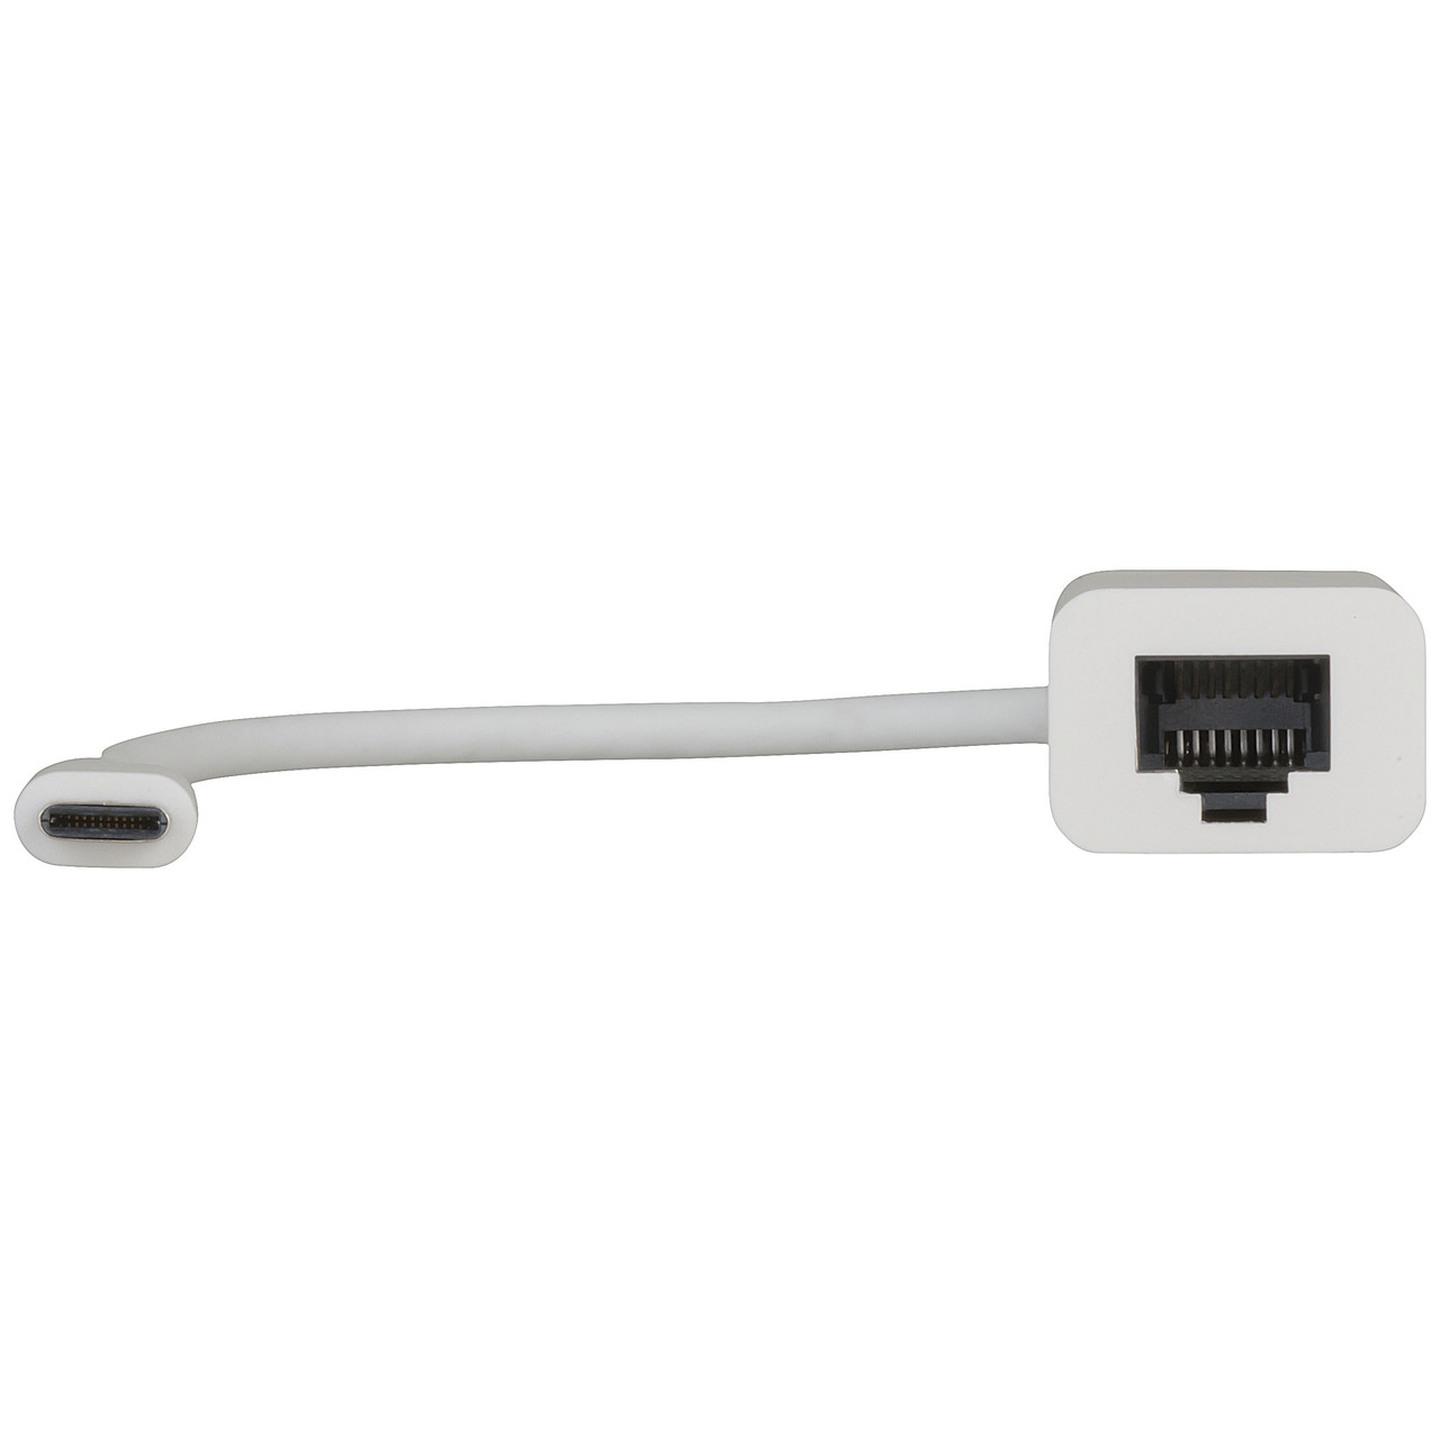 USB Type-C Gigabit Network Adaptor with 3 Port USB 3.0 Hub